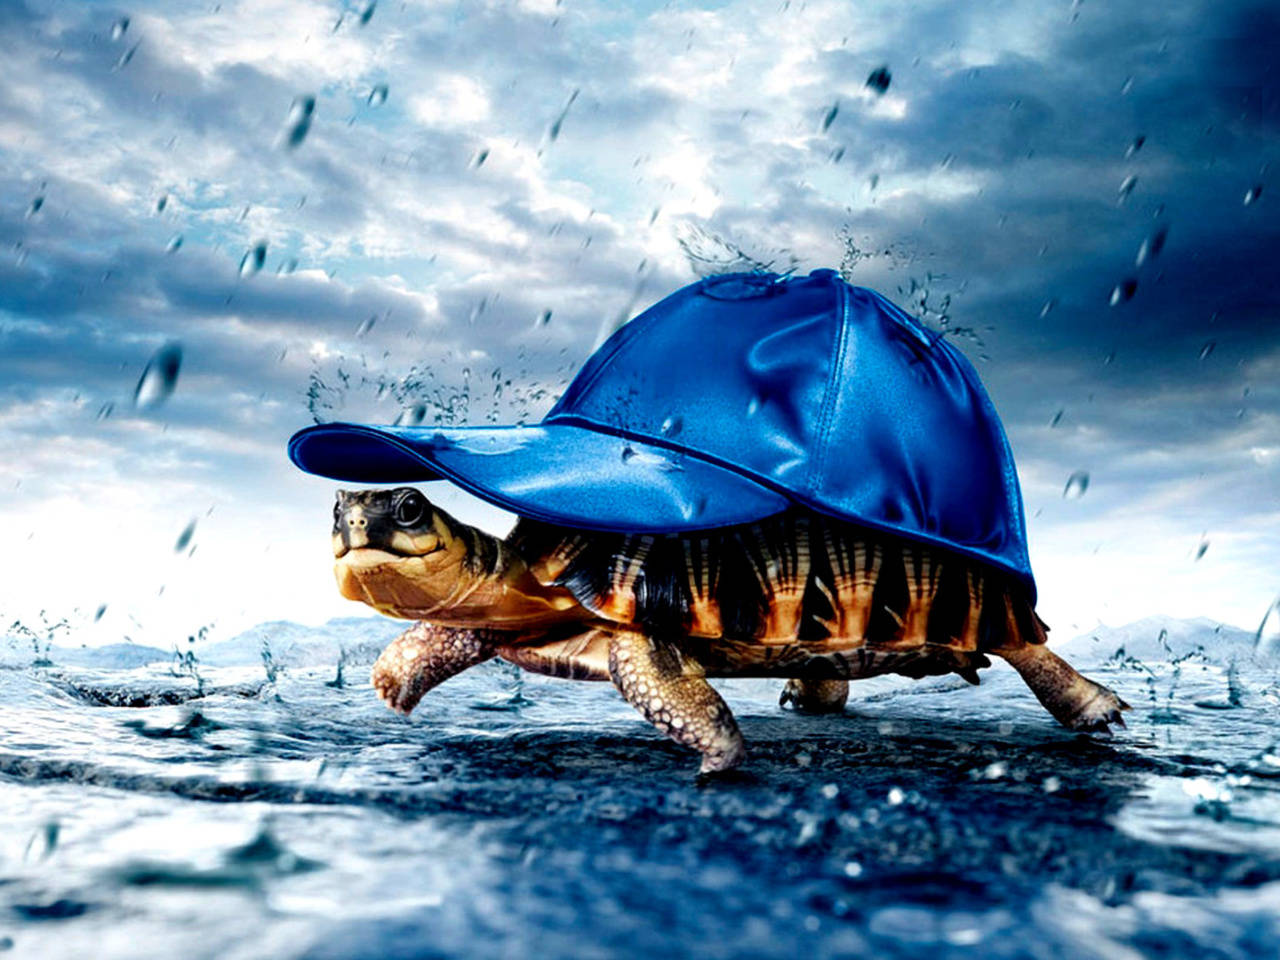 Cute Turtle With Blue Baseball Cap Wallpaper